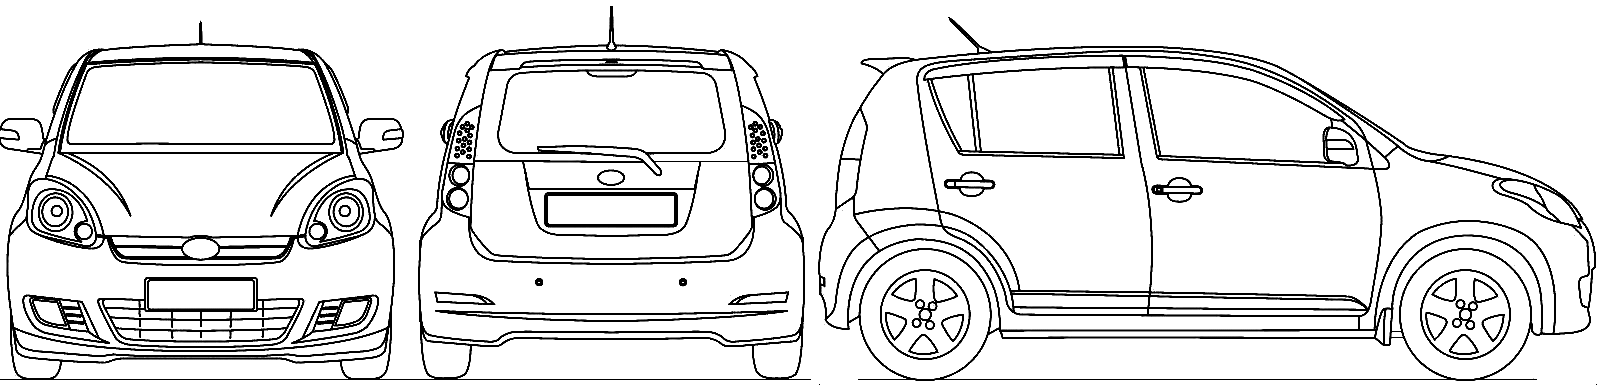 2008 Perodua MyVi Hatchback blueprints free - Outlines